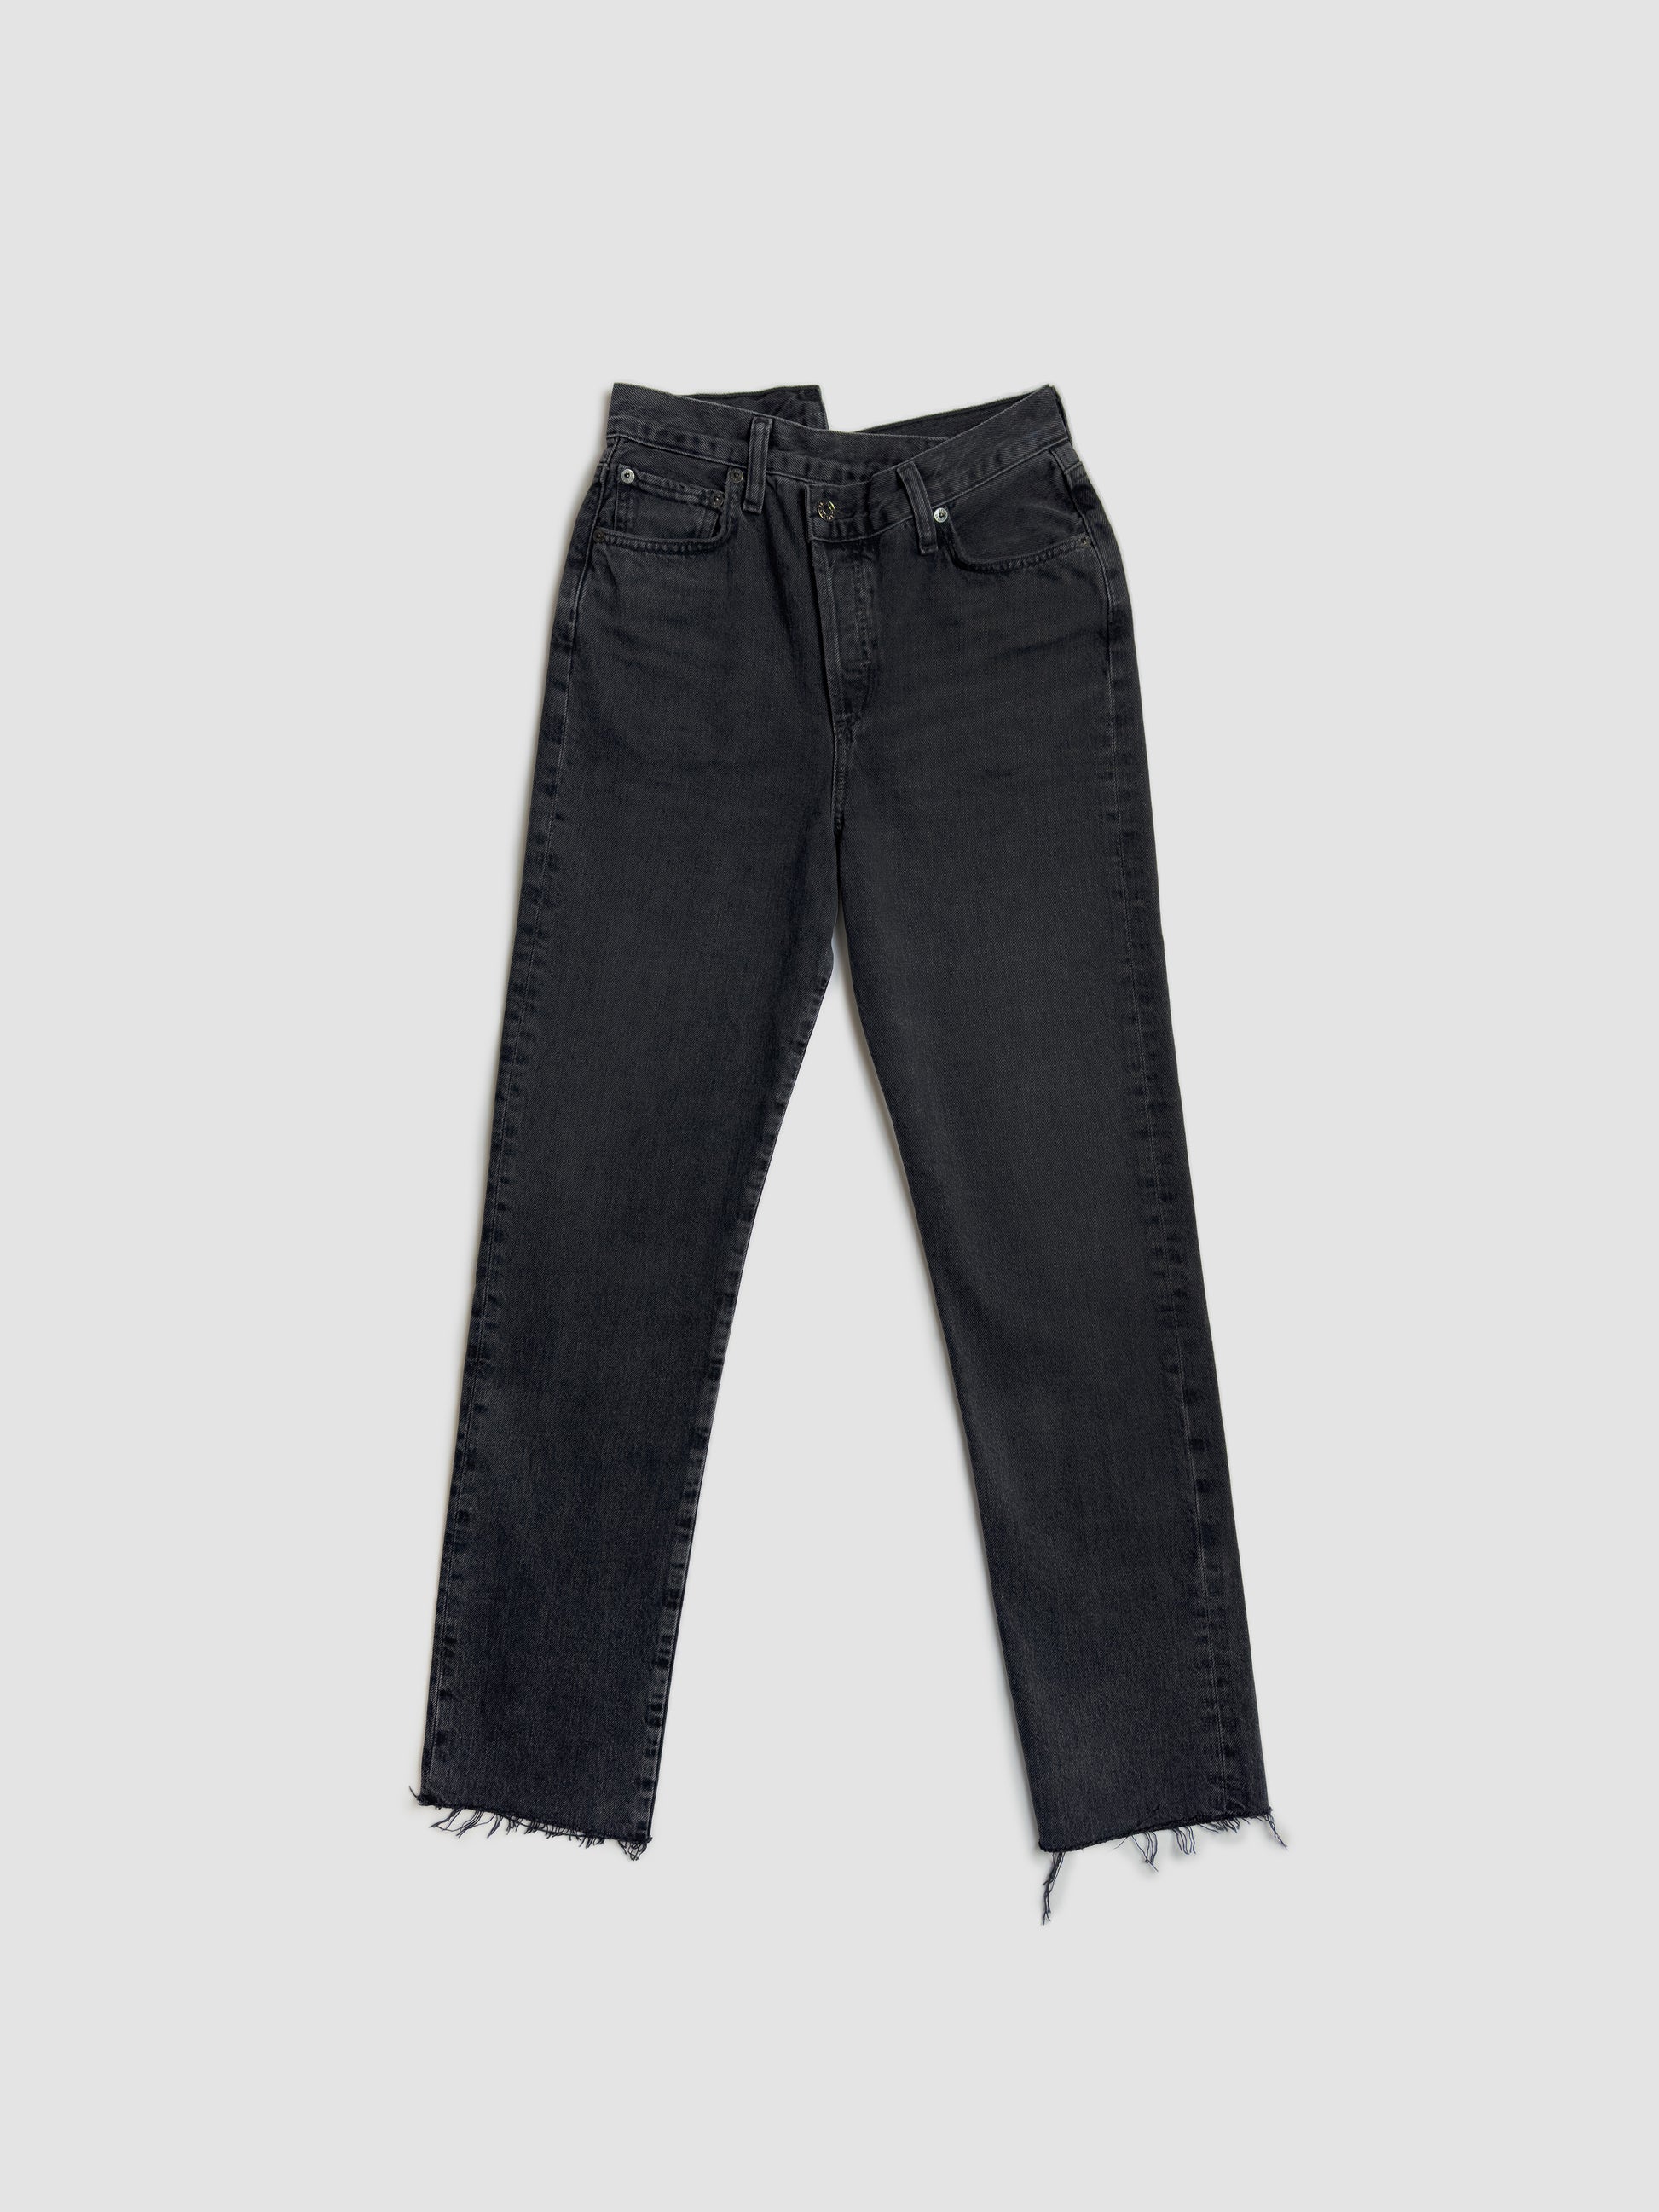 Criss Cross Straight Jeans in Black - Via Store